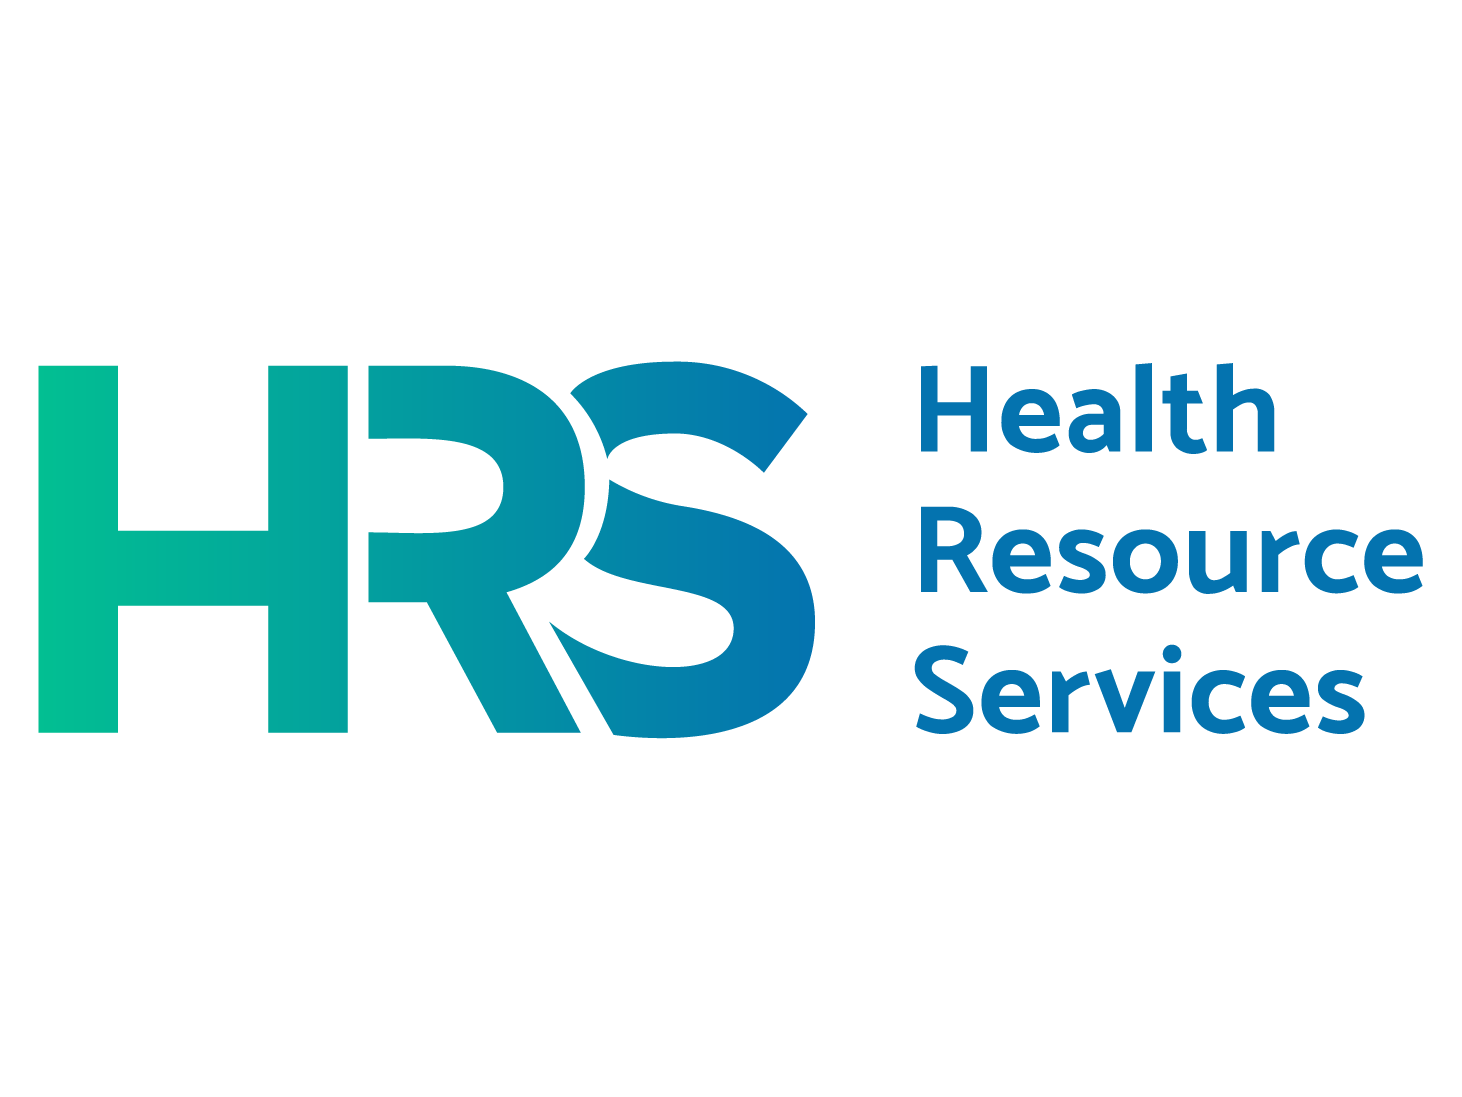 Health Resource Services